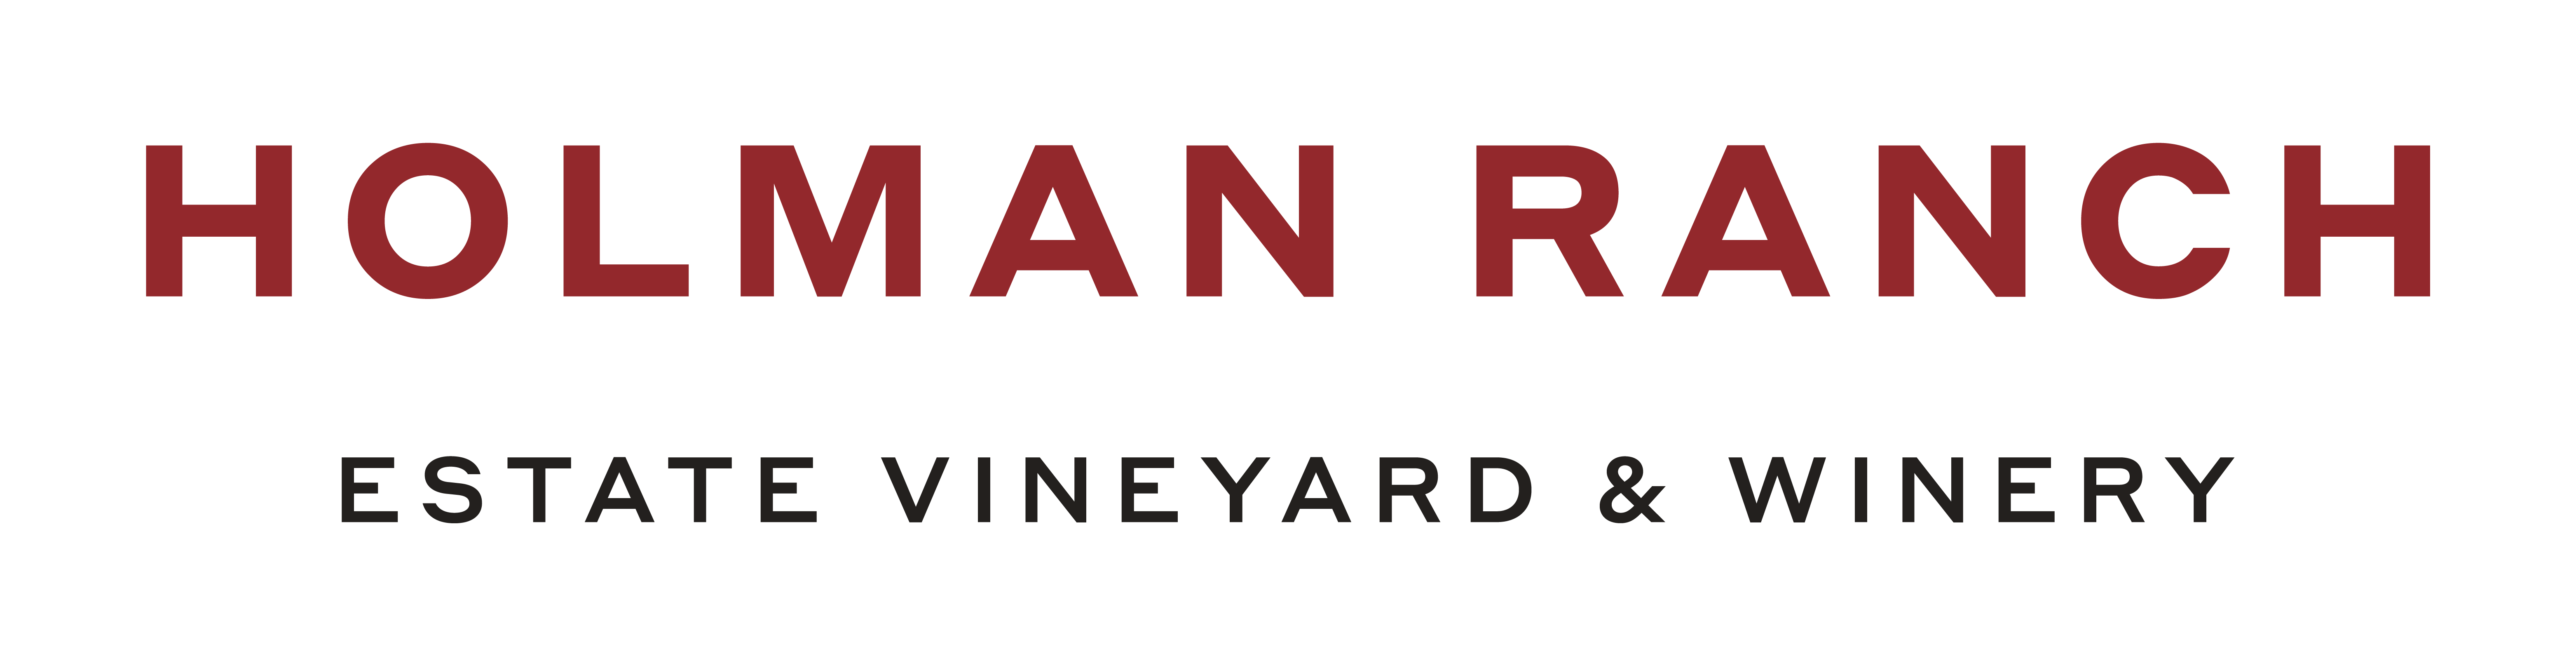 Holman Ranch (Presenting)